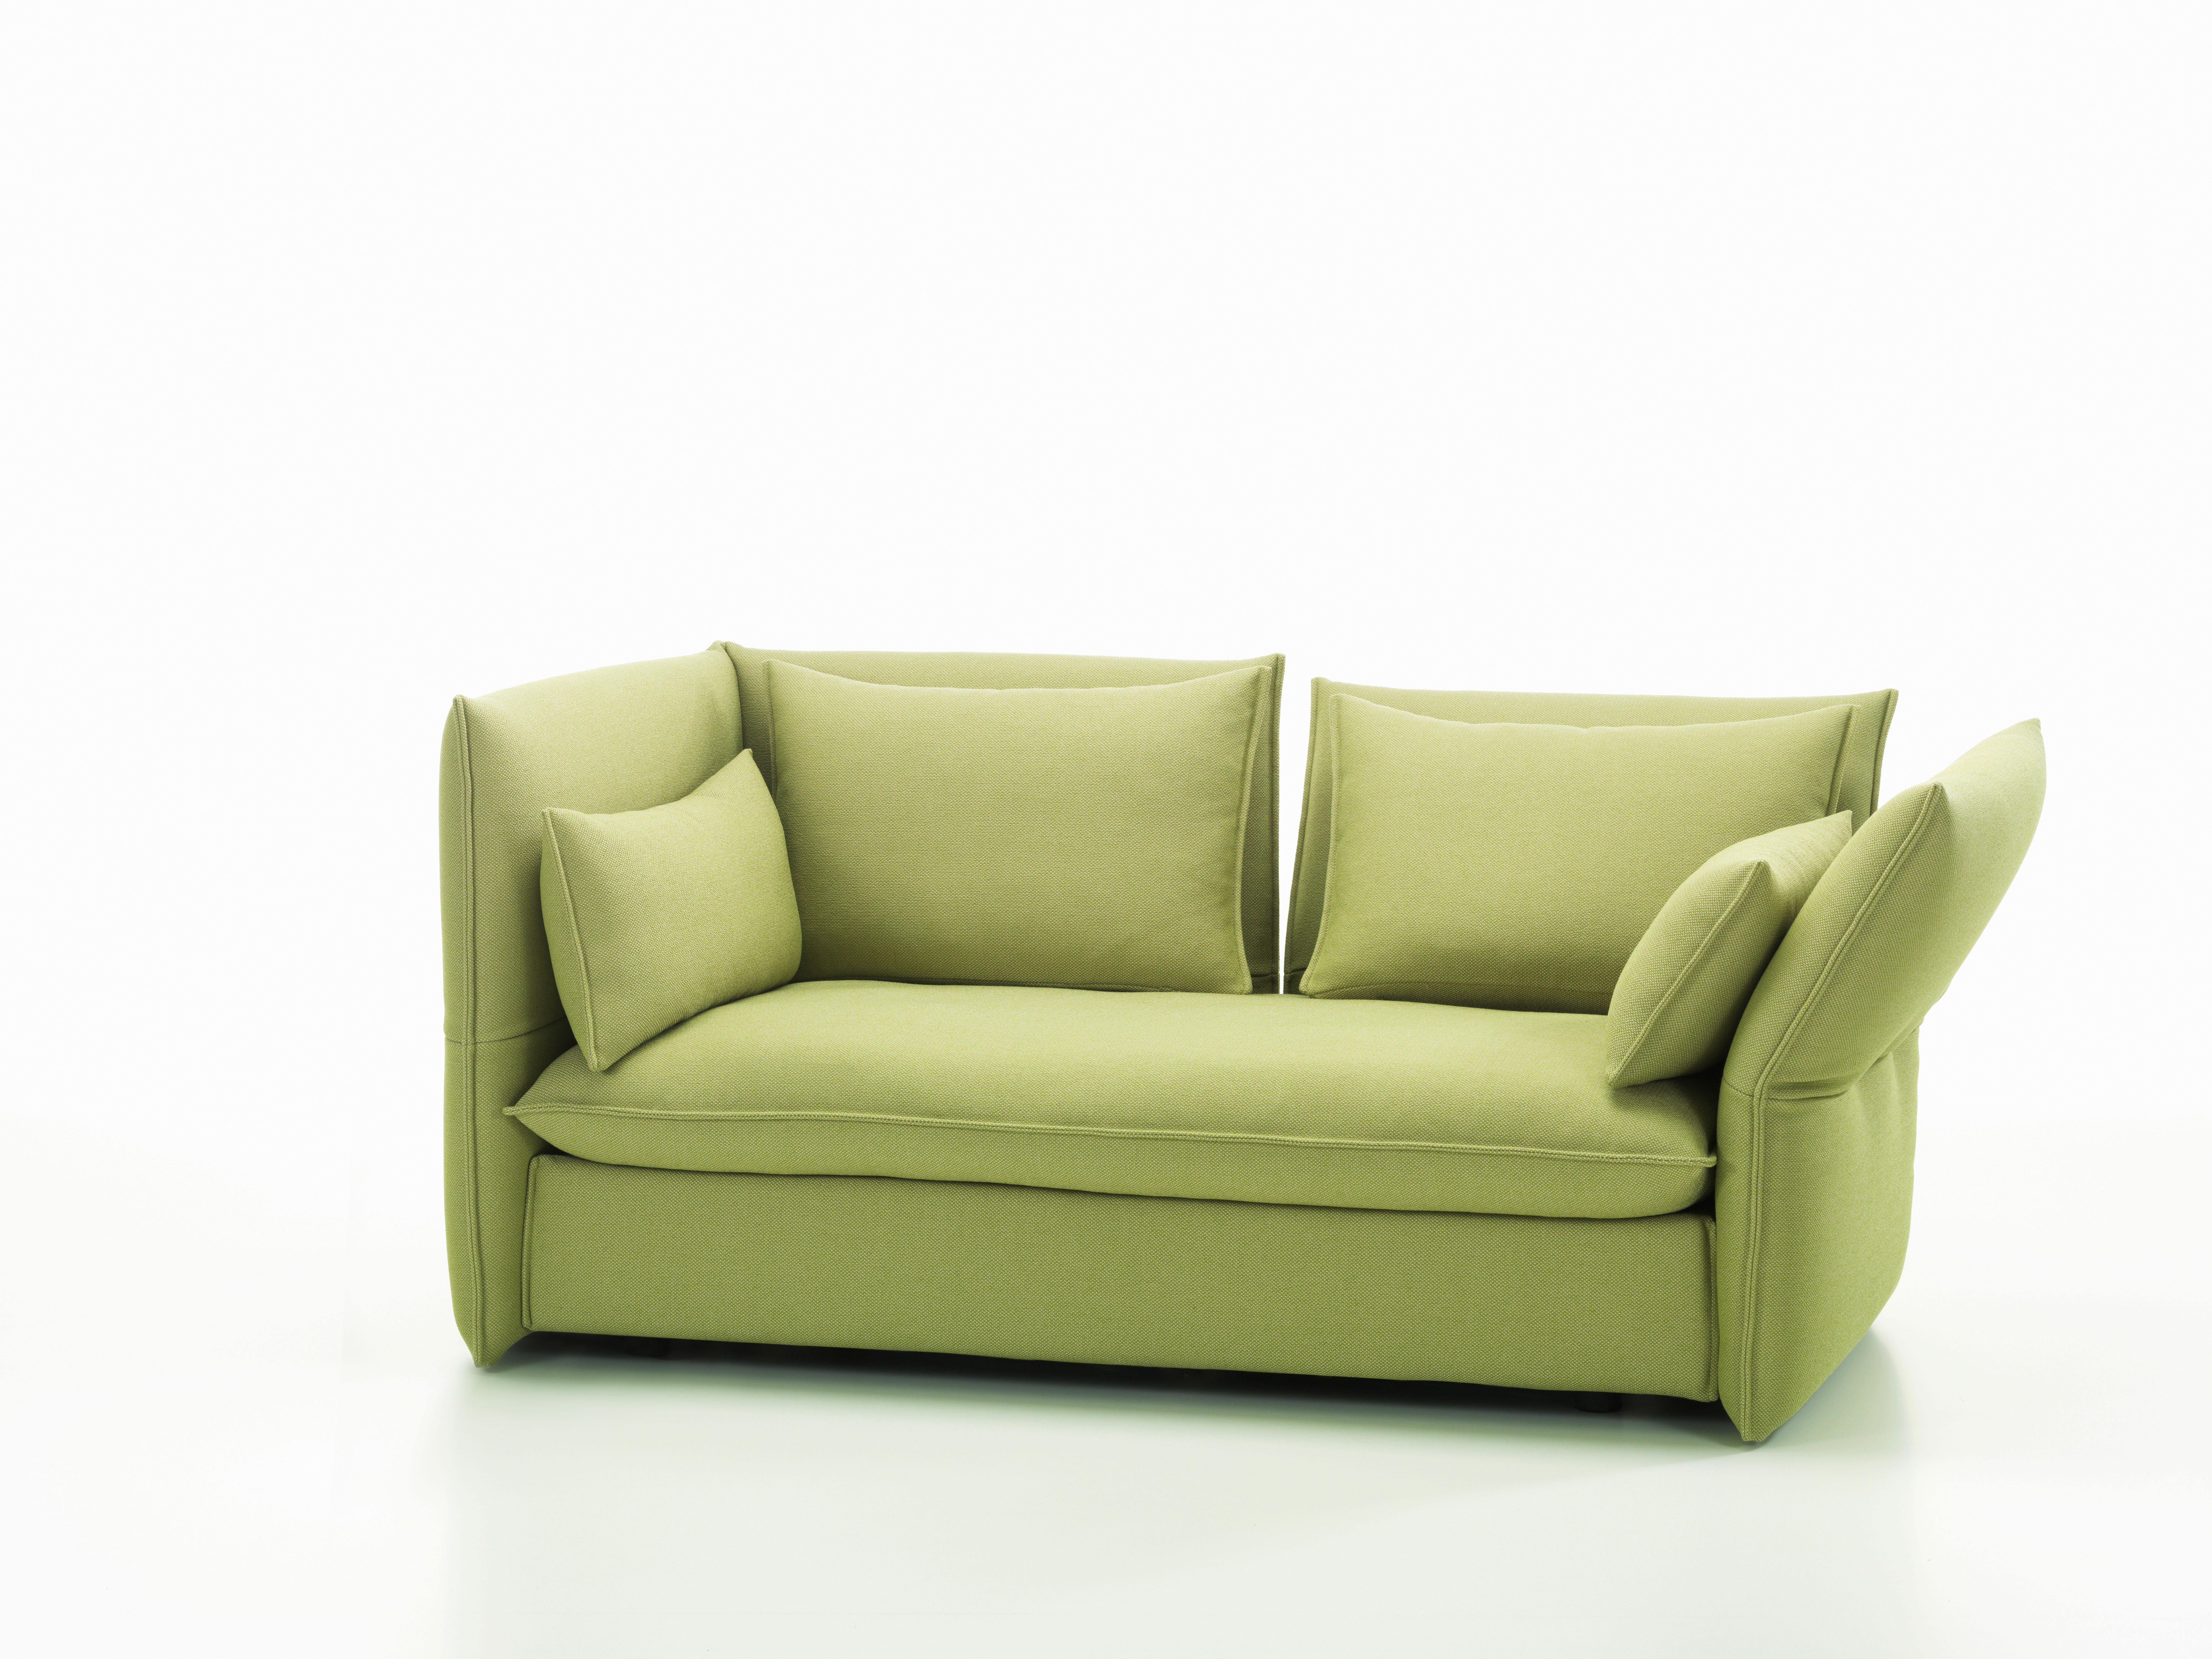 Contemporary Vitra Mariposa 2-Seat Sofa in Sand & Avocado Credo by Edward Barber & Jay For Sale